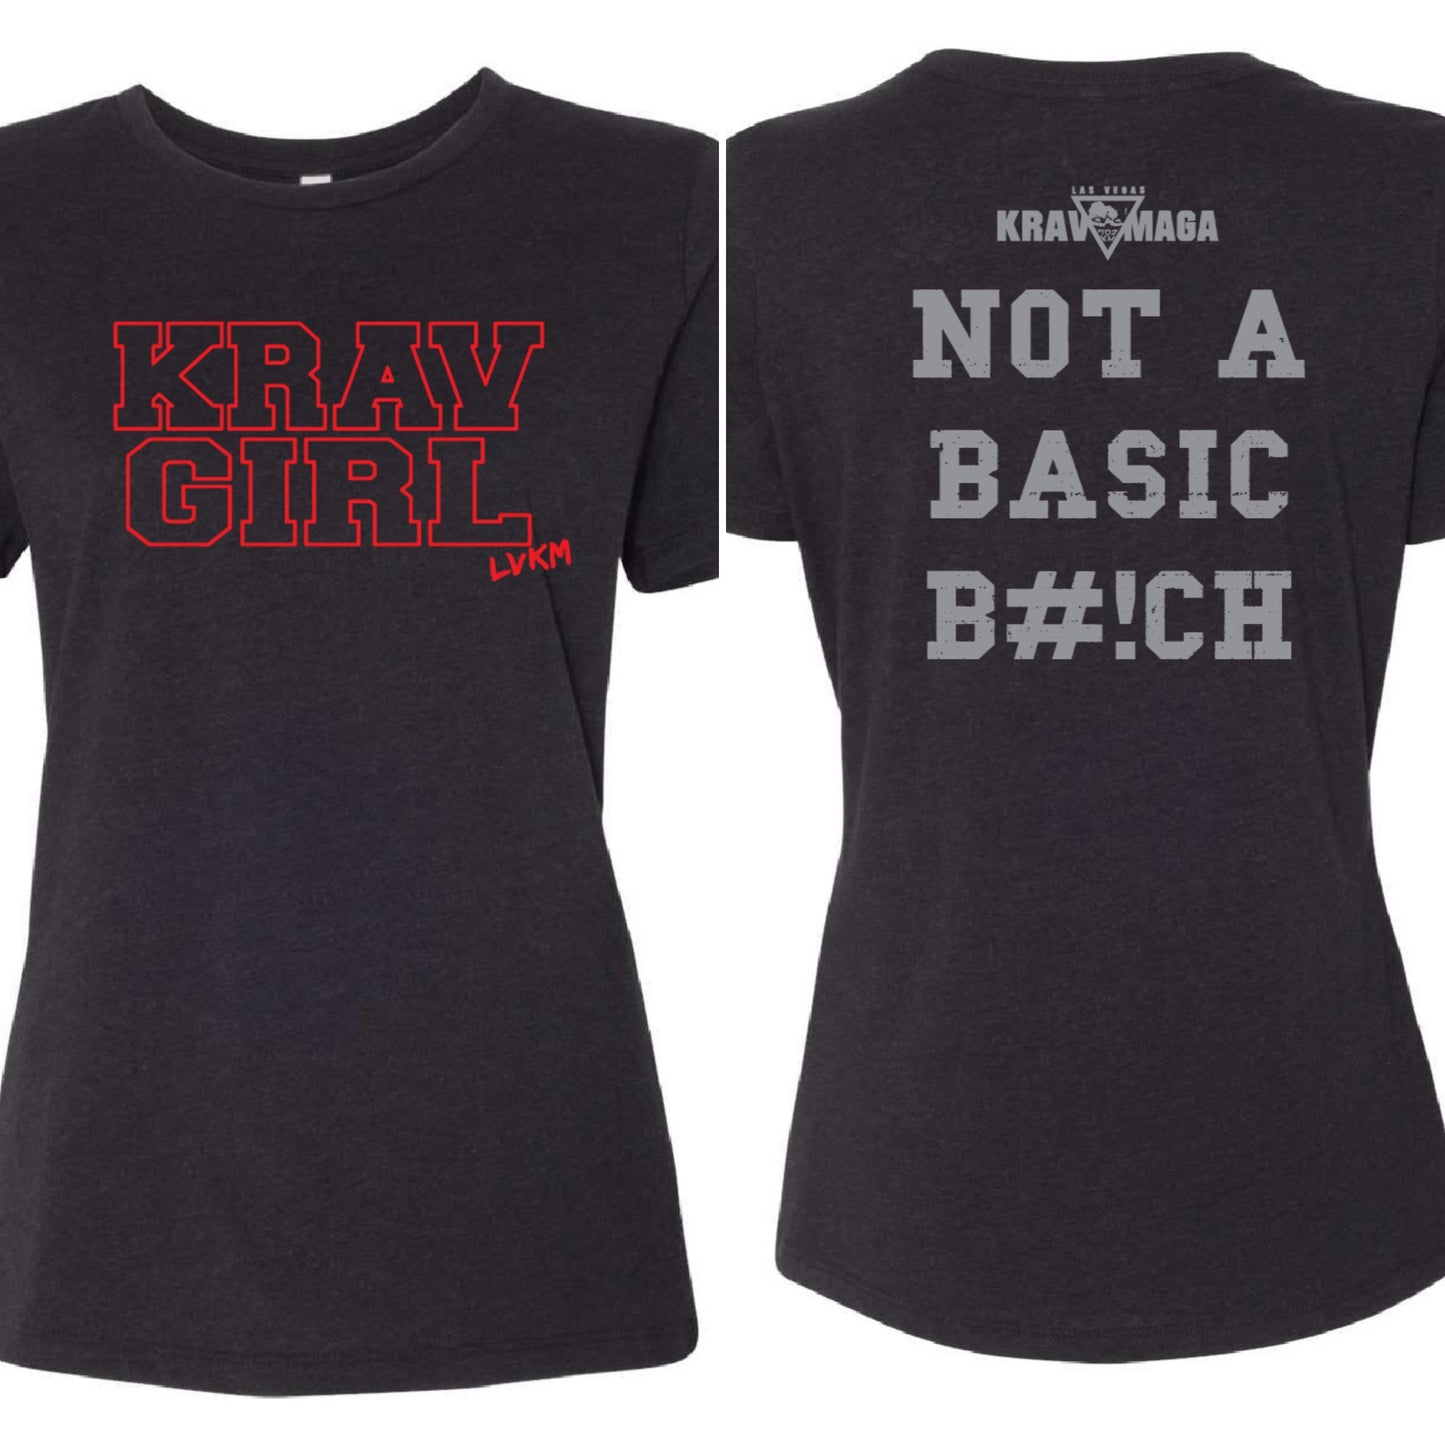 Krav Girl Cotton Blend Fitted T-Shirt - Empowerment in Training - Las Vegas Combat Academy